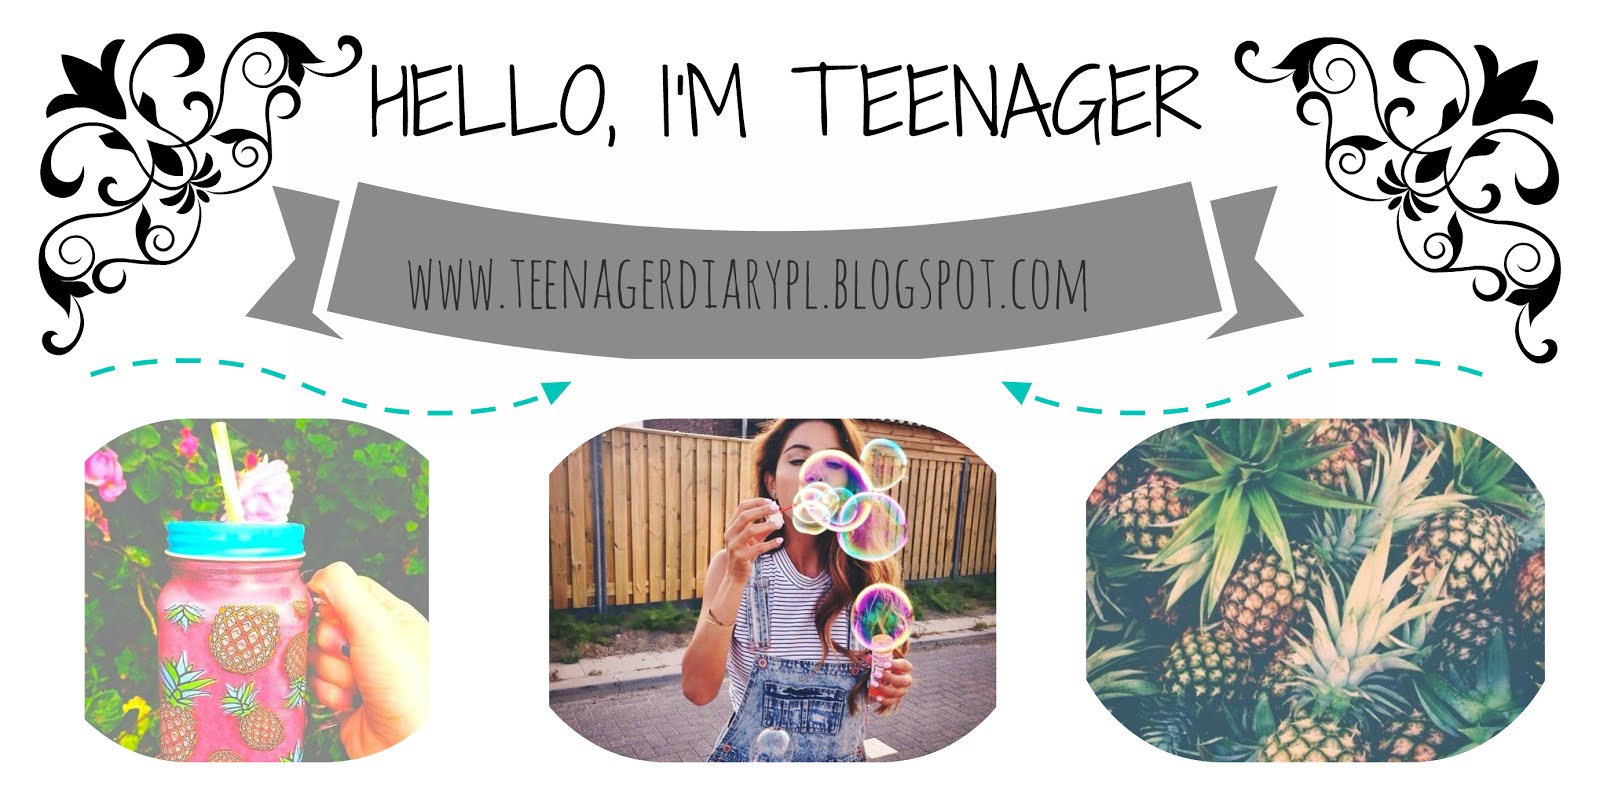 Hello, I'm teenager